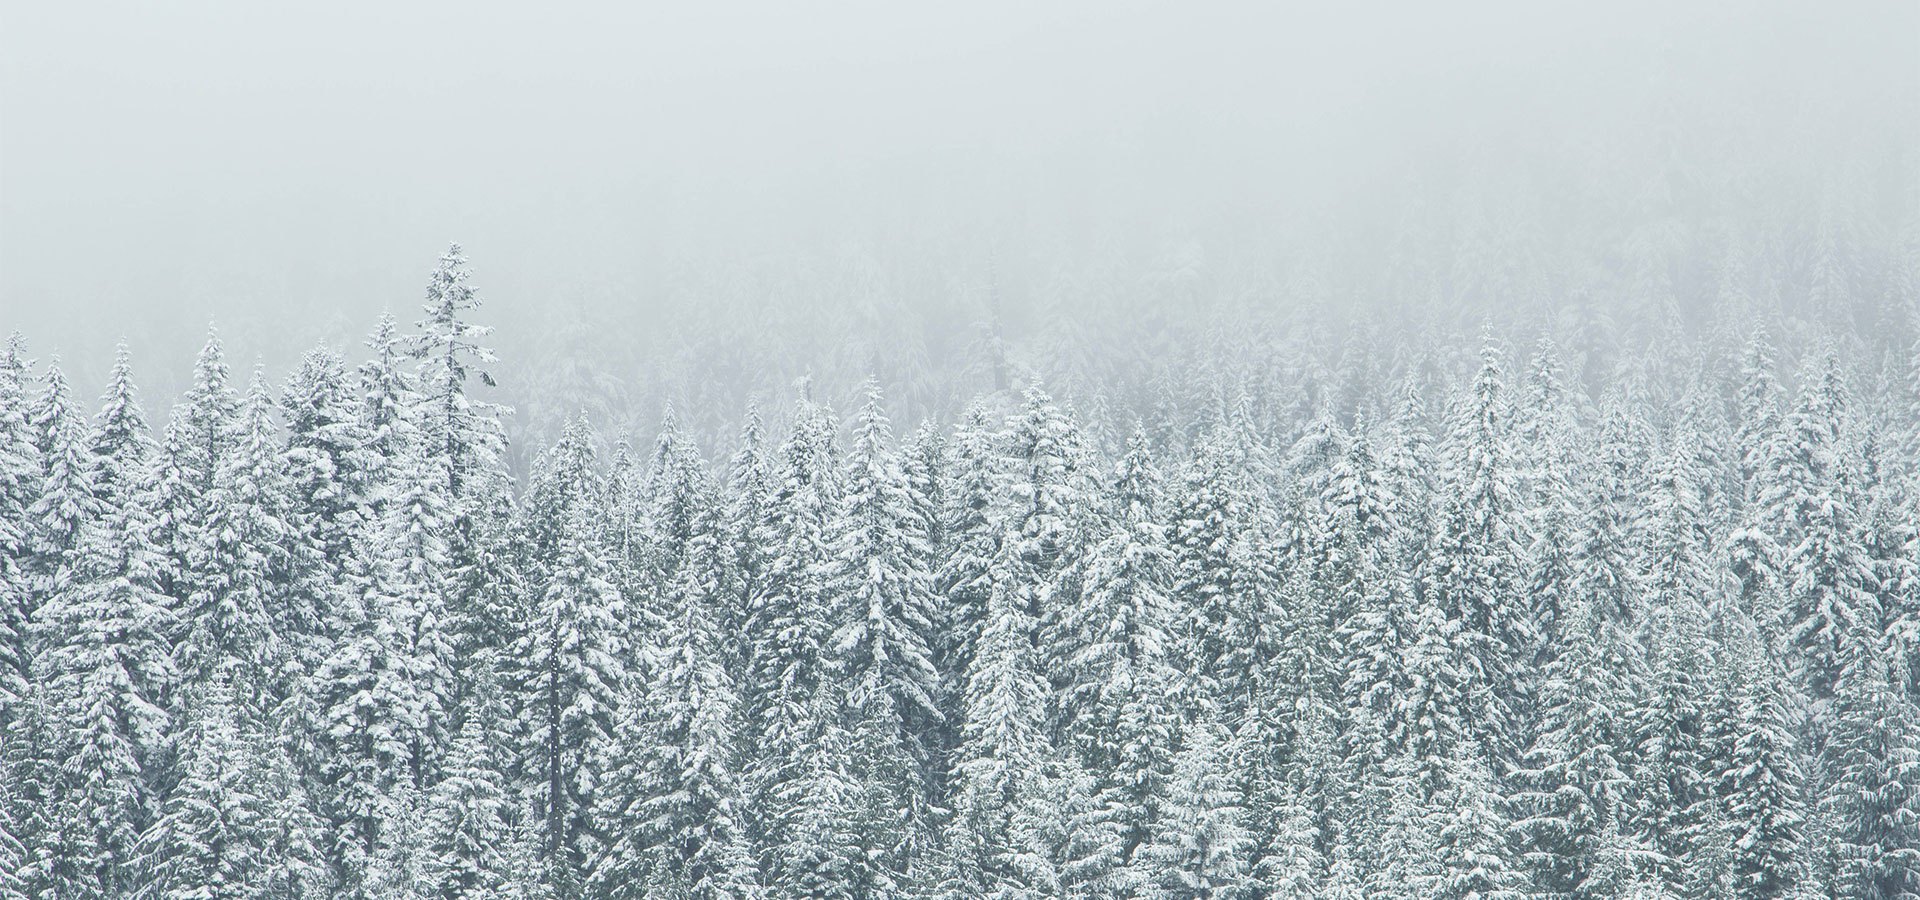 WordPress Survival Skills image of winter forrest